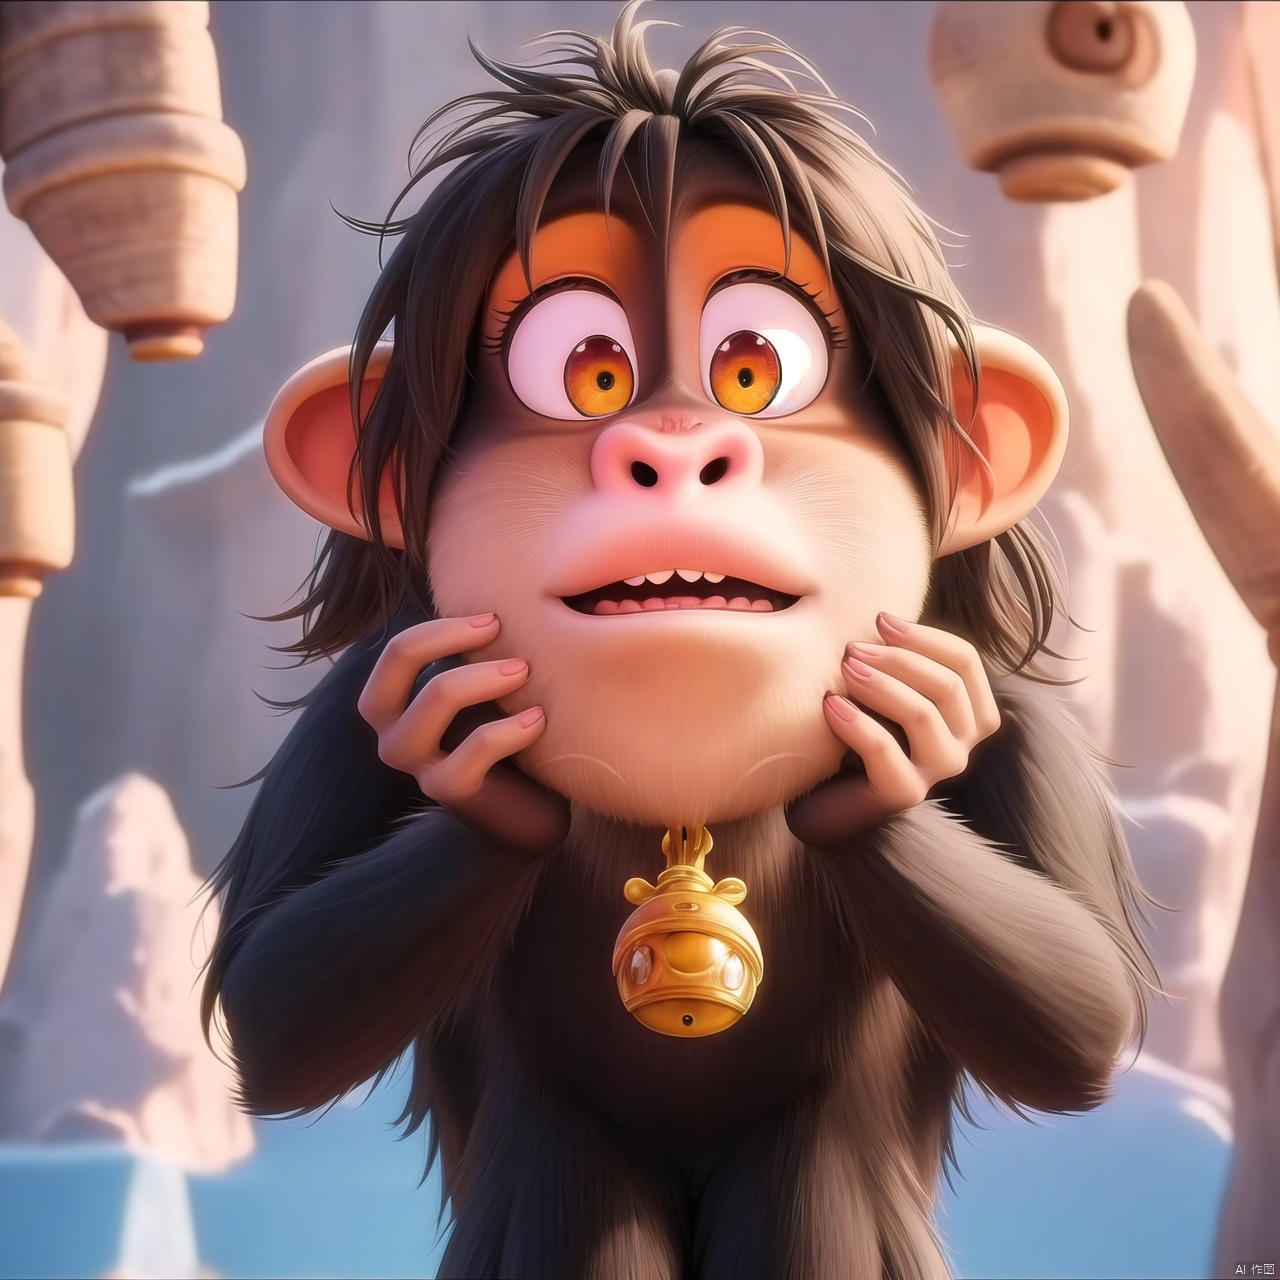 Monkey head, furry, cute, big eyes, surprised, depth of field, Disney style, animation